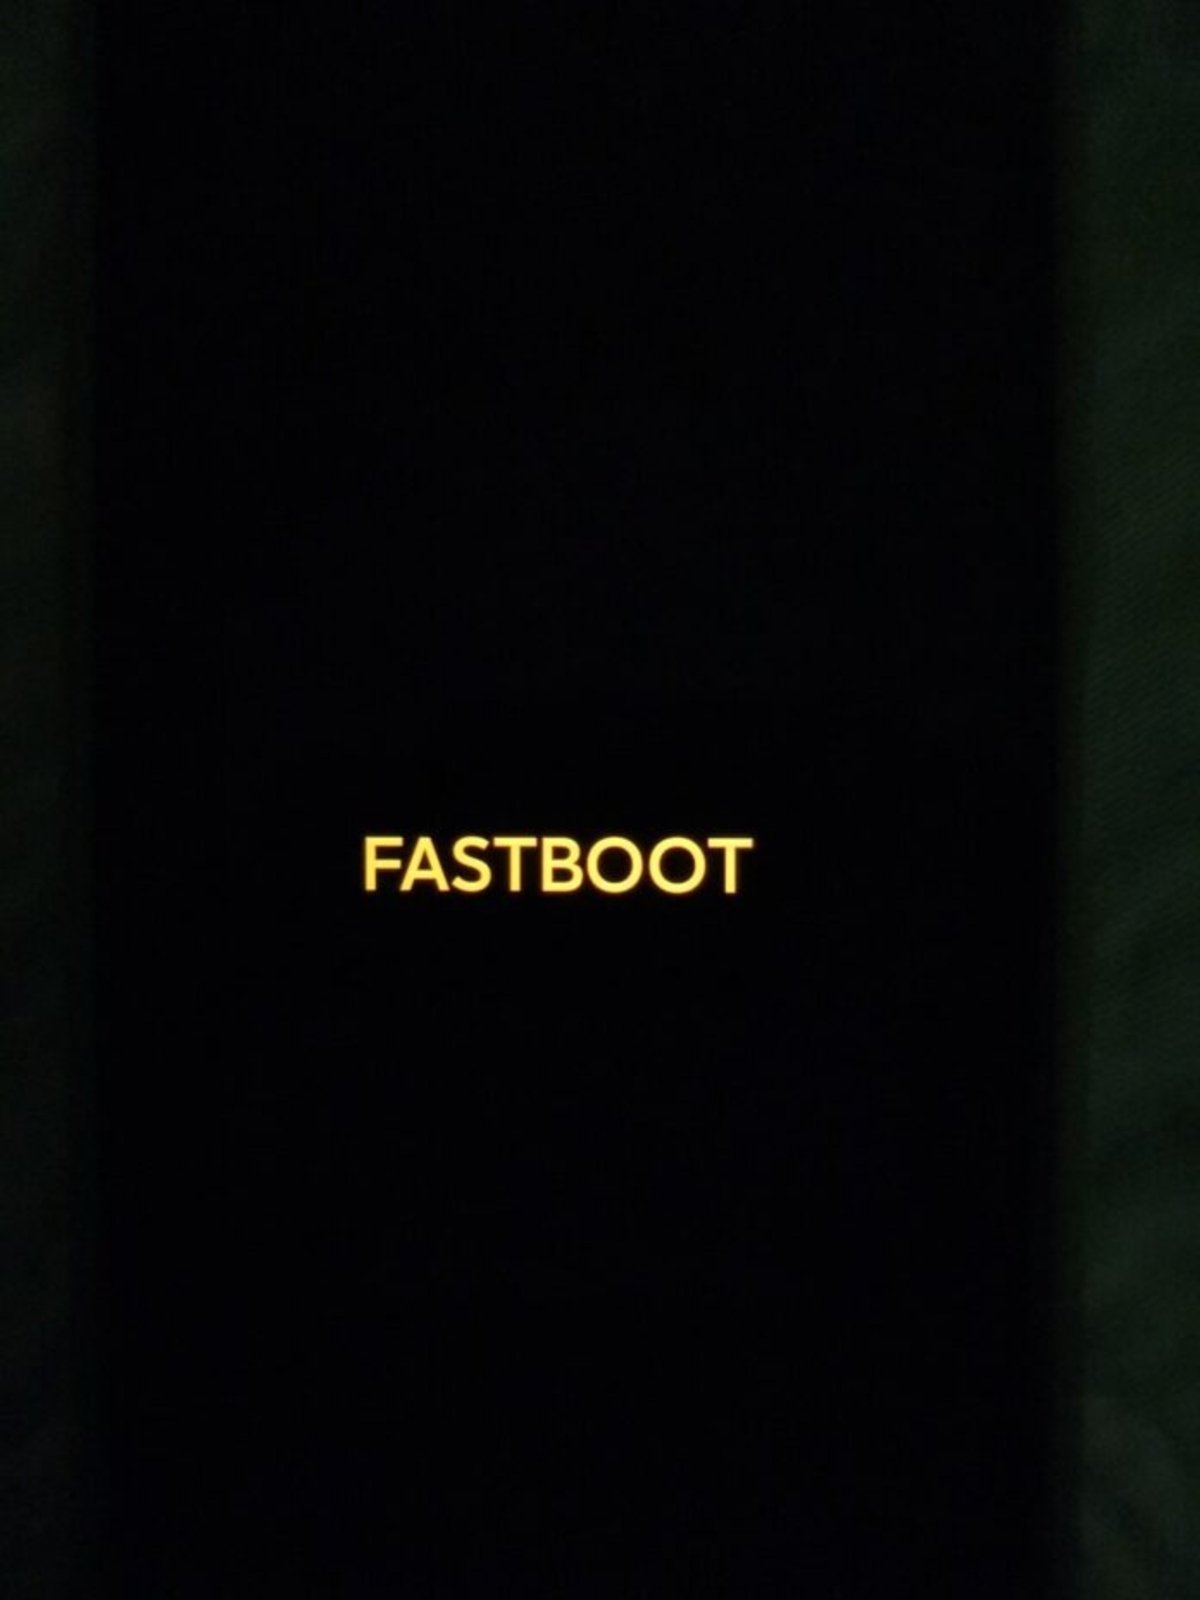 Fastboot screen on Xiaomi